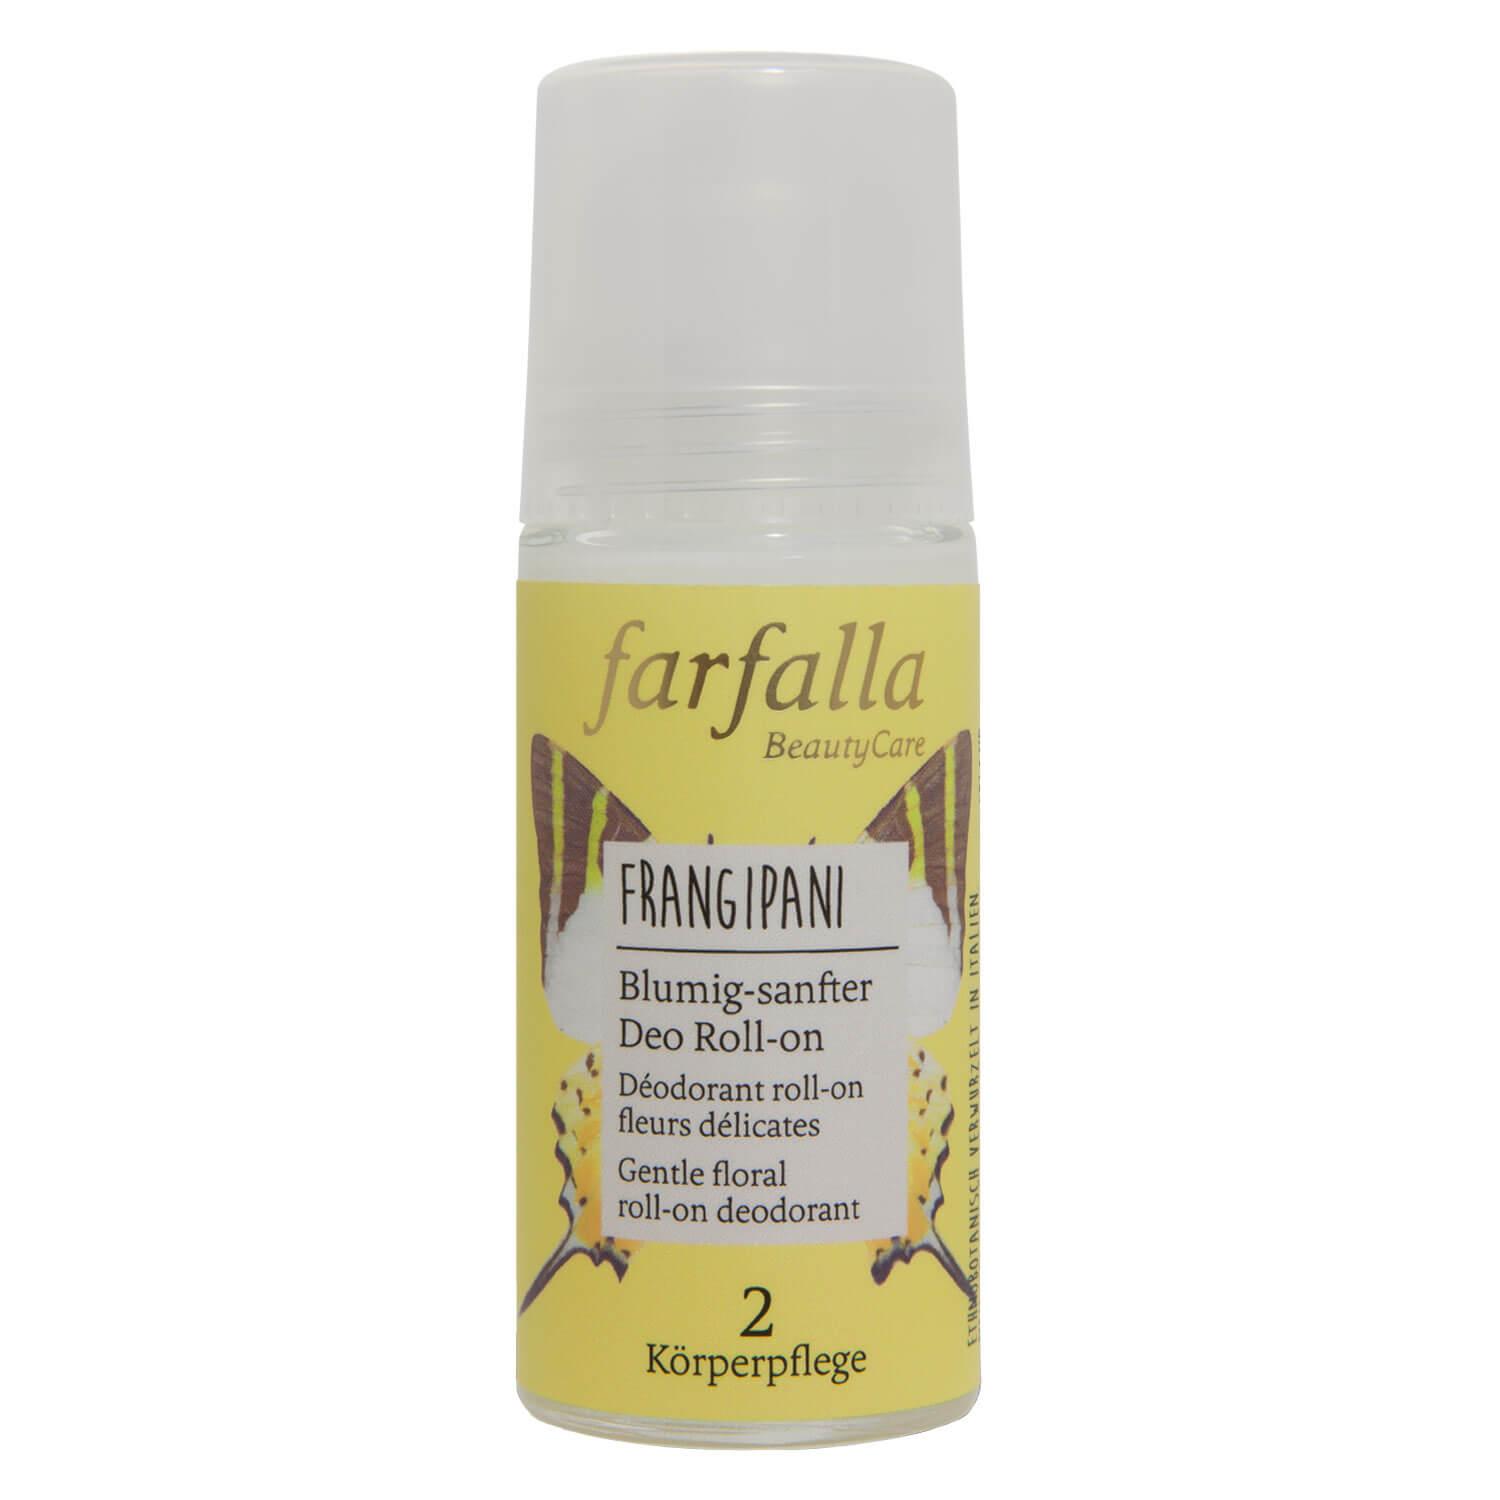 Farfalla Care - Frangipani, Gentle floral roll-on deodorant